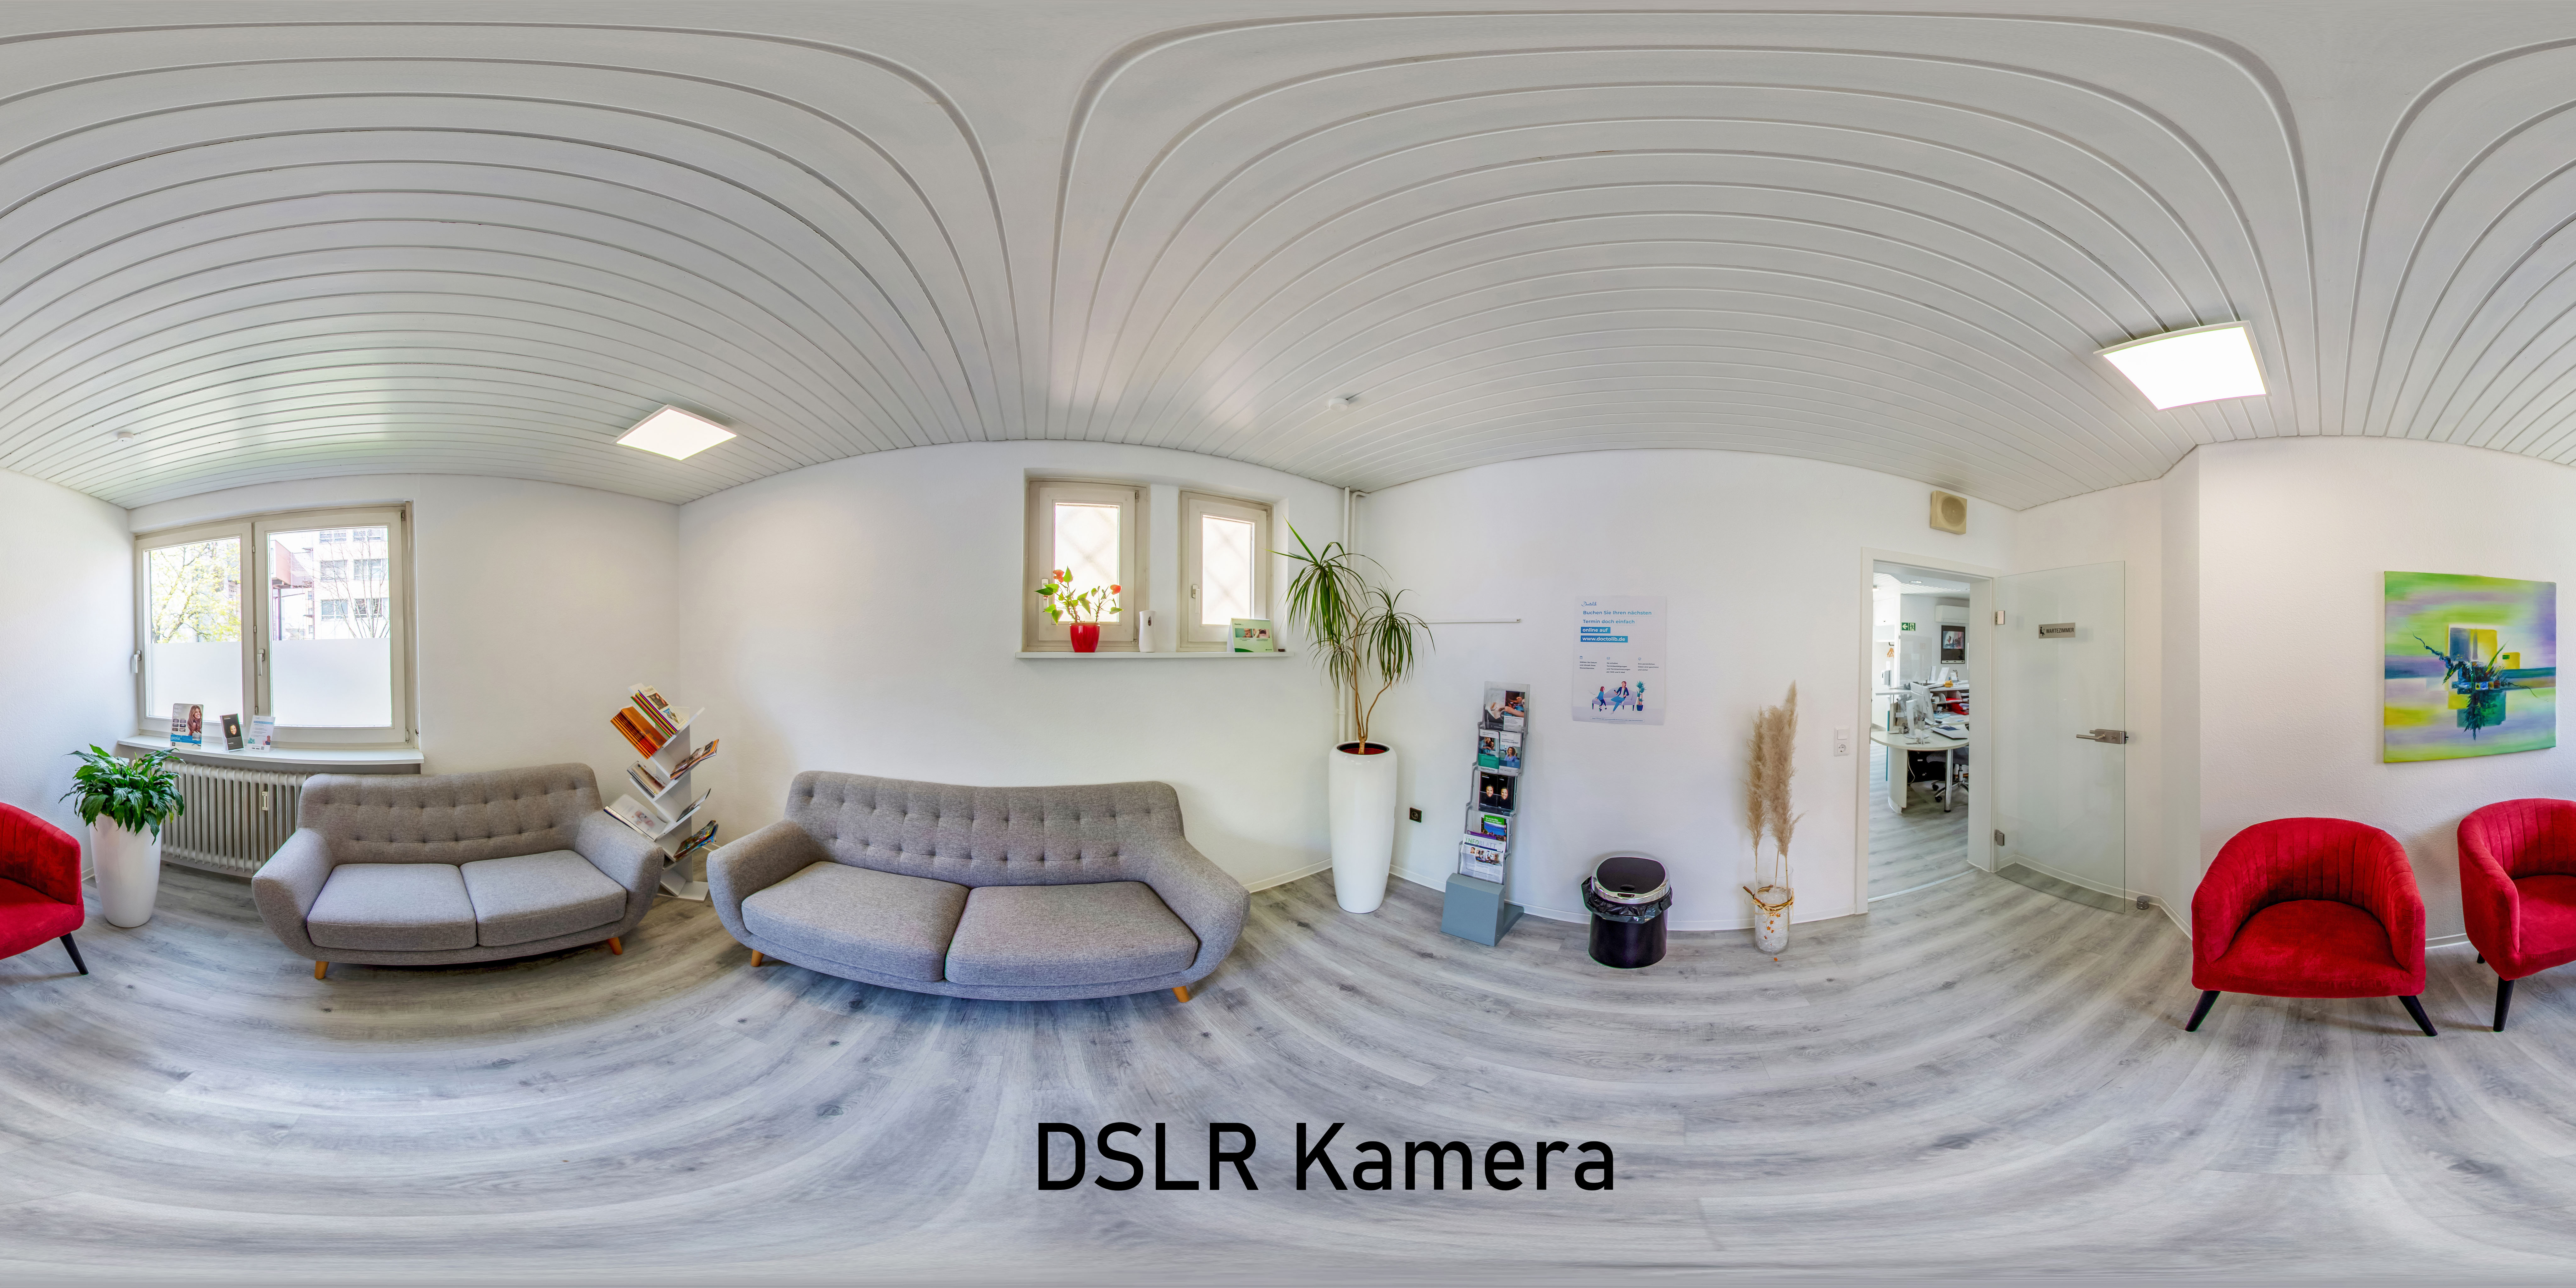 DSLR Kamera